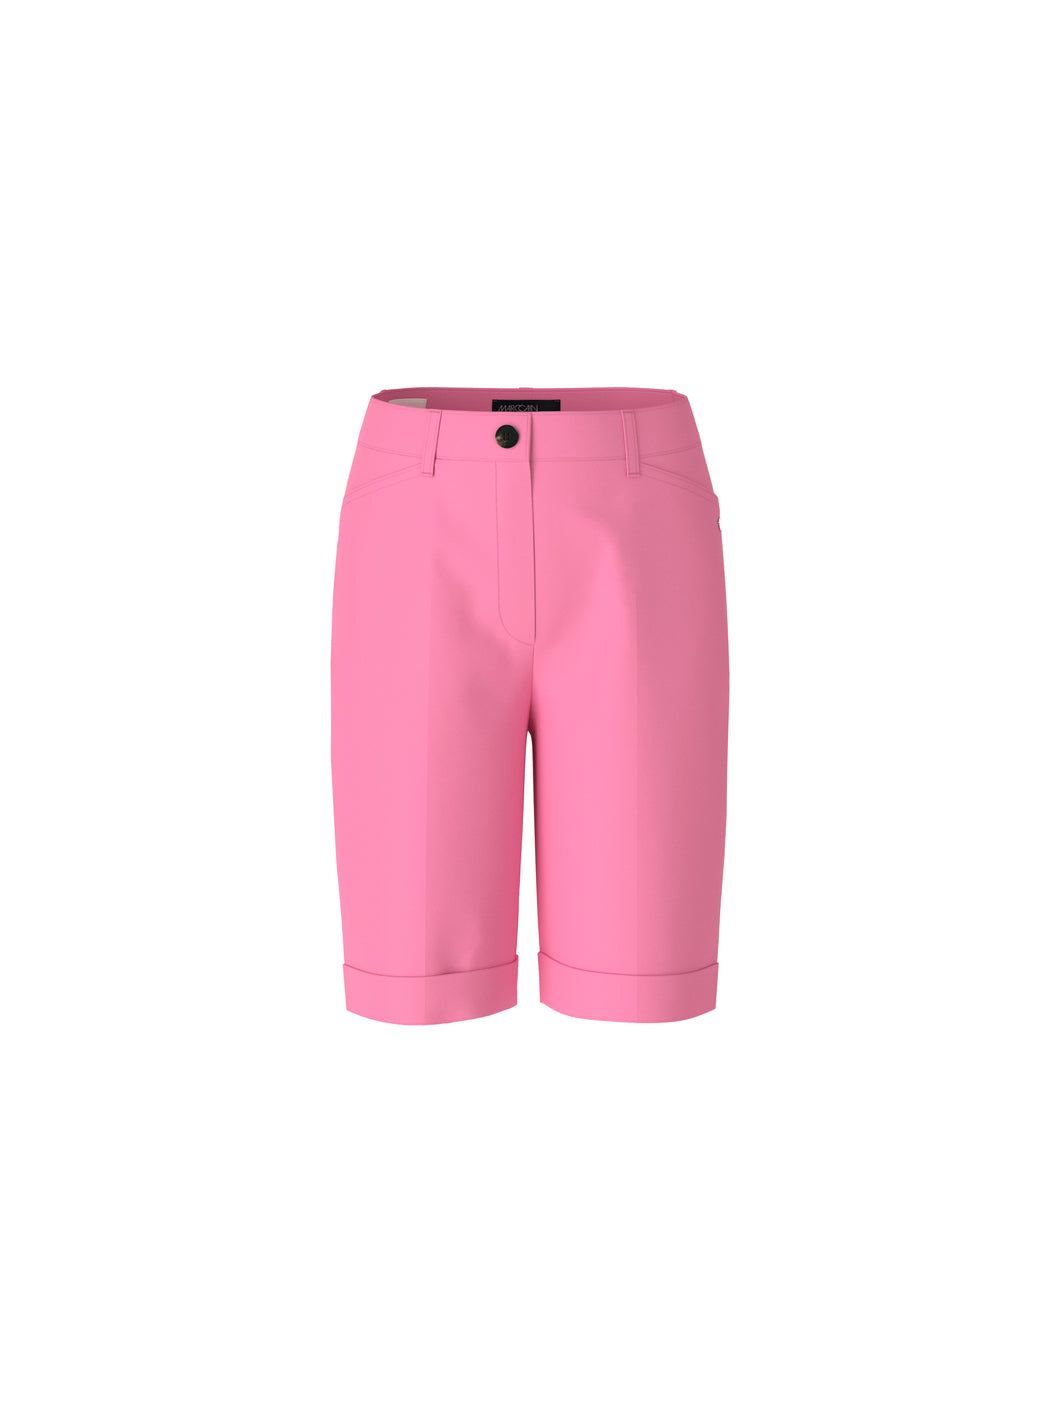 Marccain Modell FINIKE – Shorts mit Stulpen